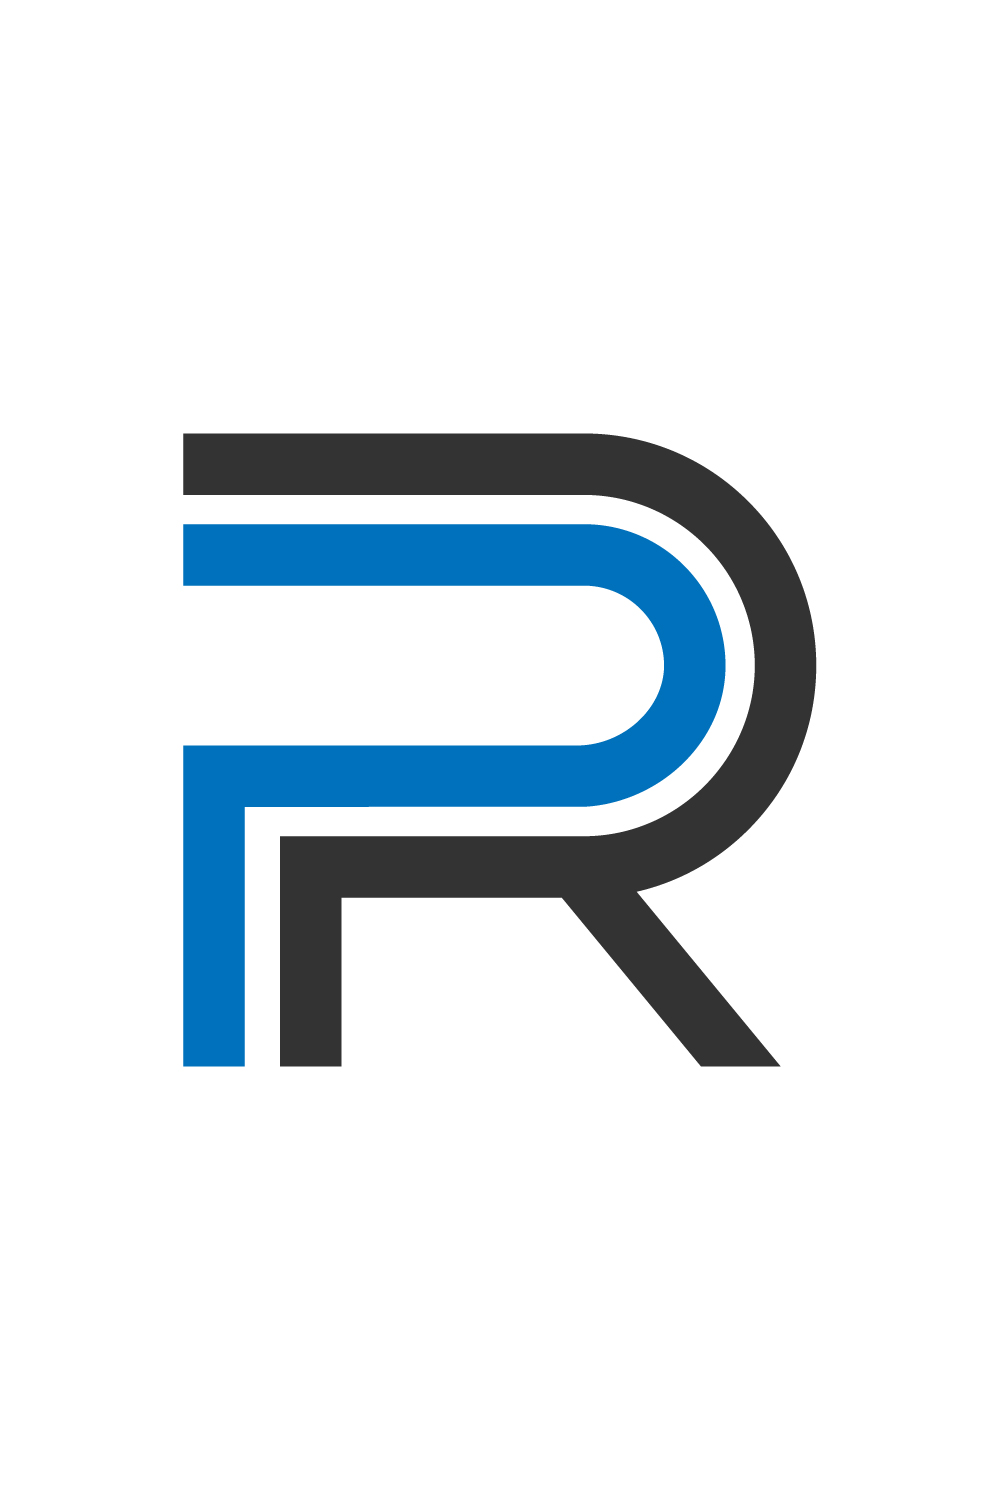 PR logo design pinterest preview image.